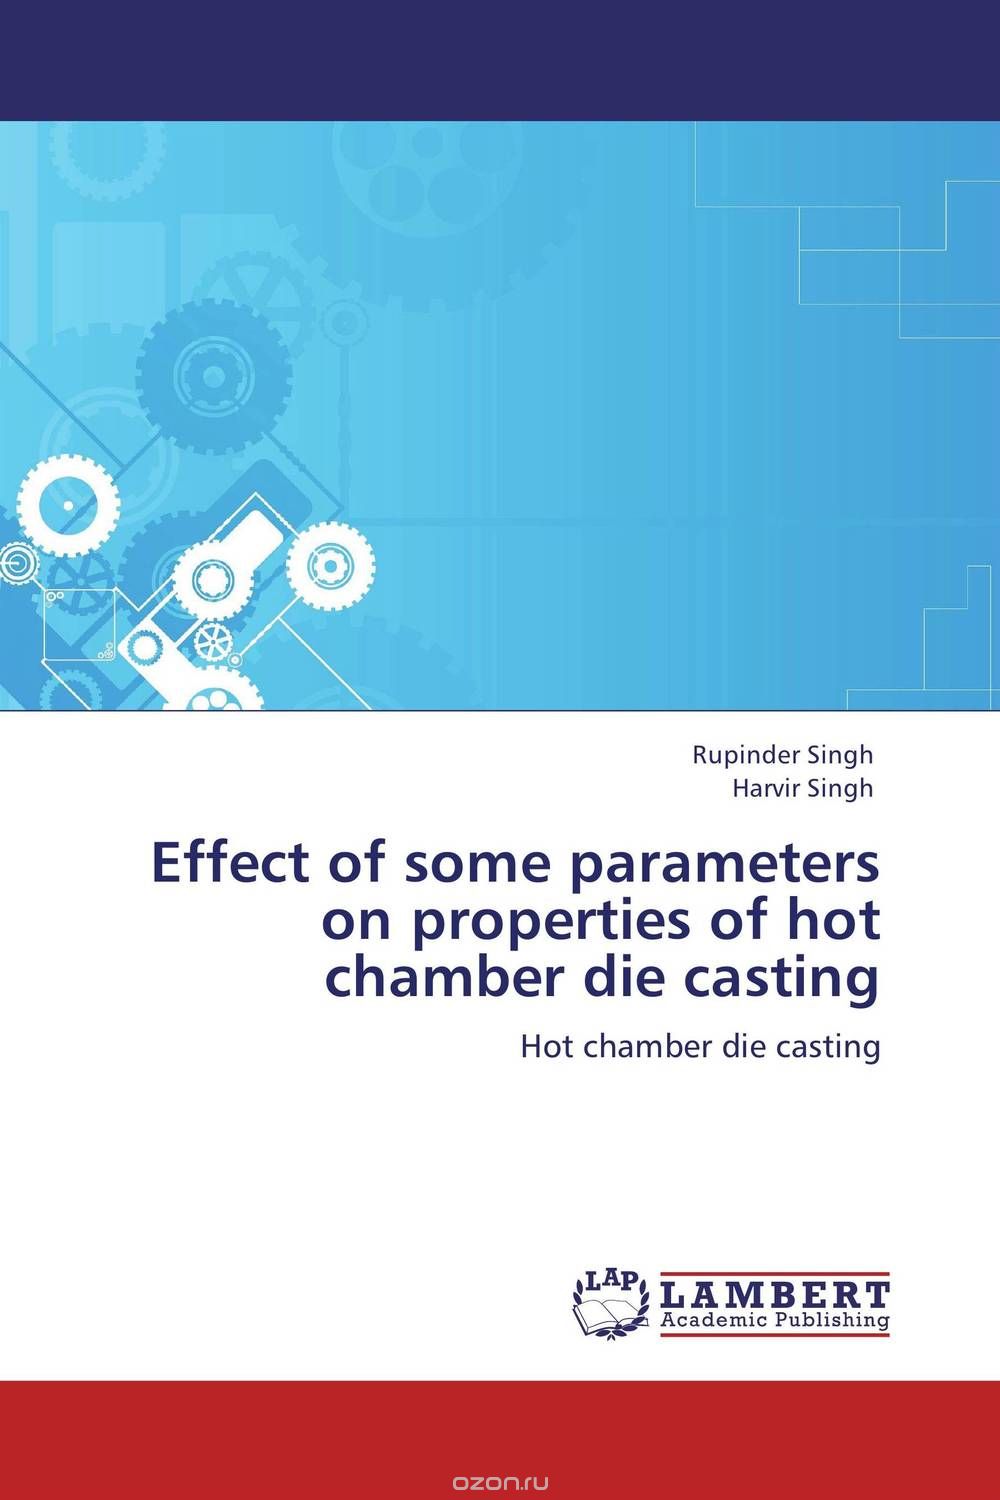 Скачать книгу "Effect of some parameters on properties of hot chamber die casting"